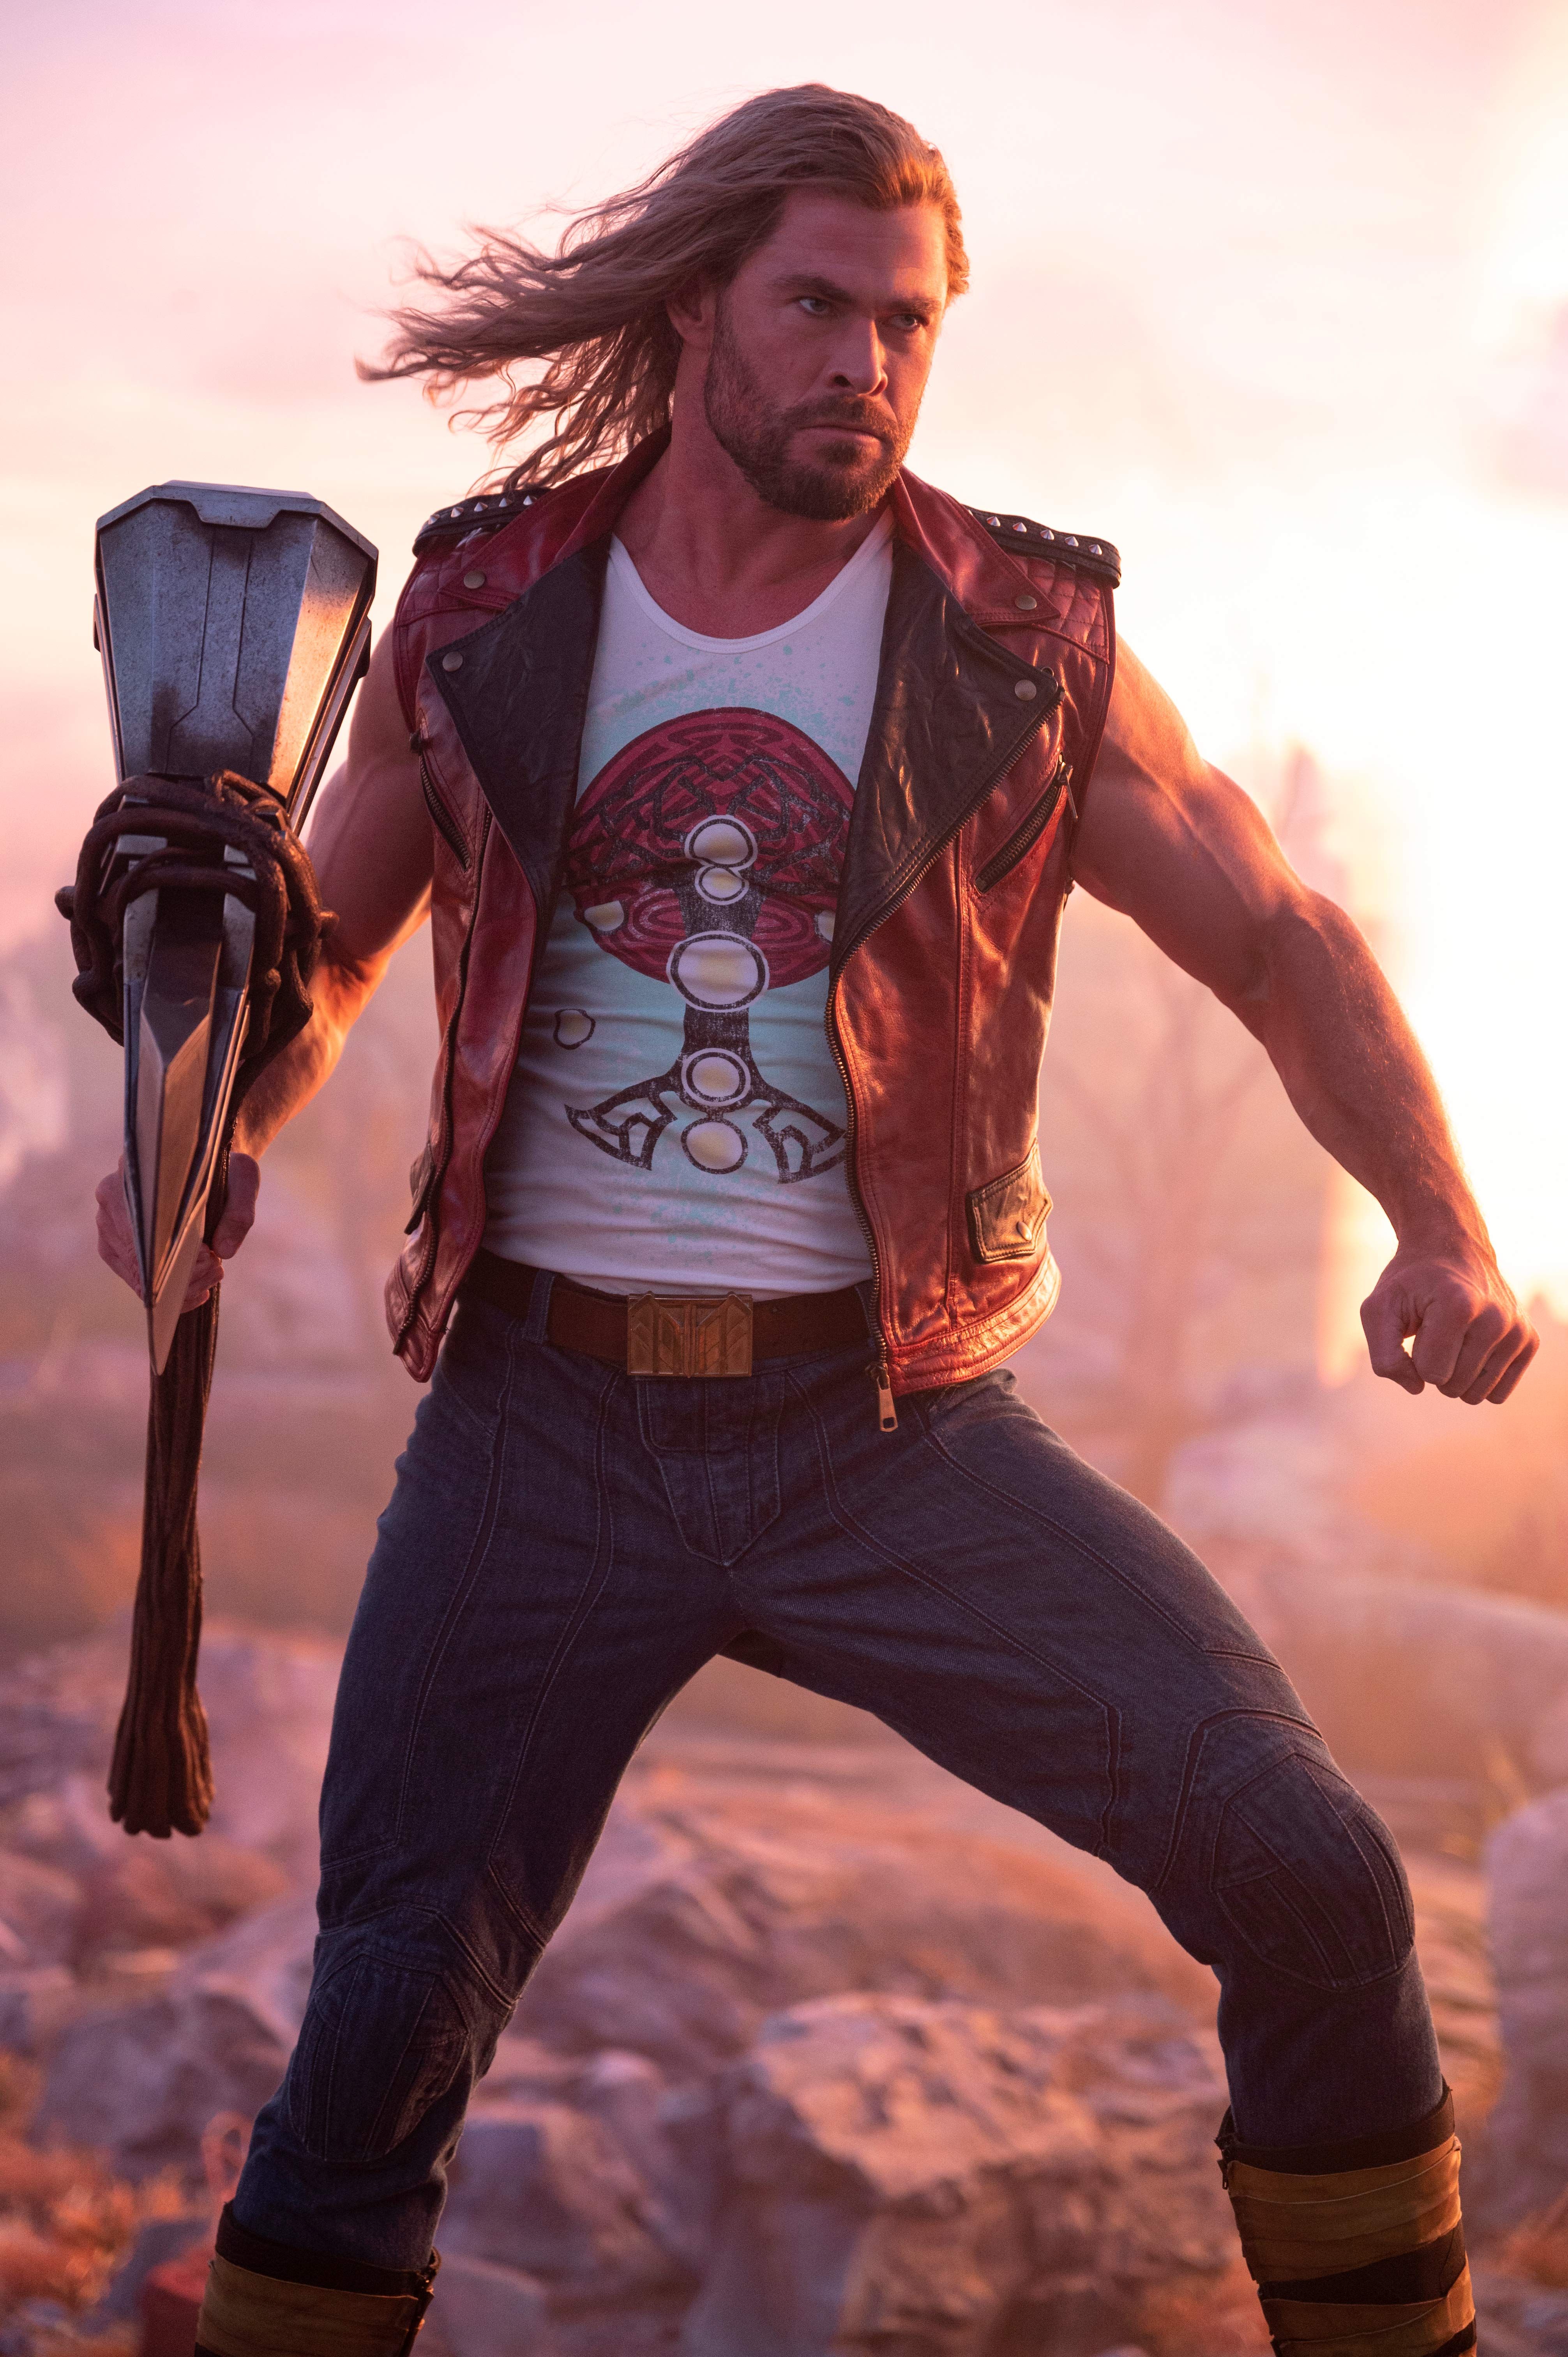 Chris Hemsworth thinks Thor will die in the next movie